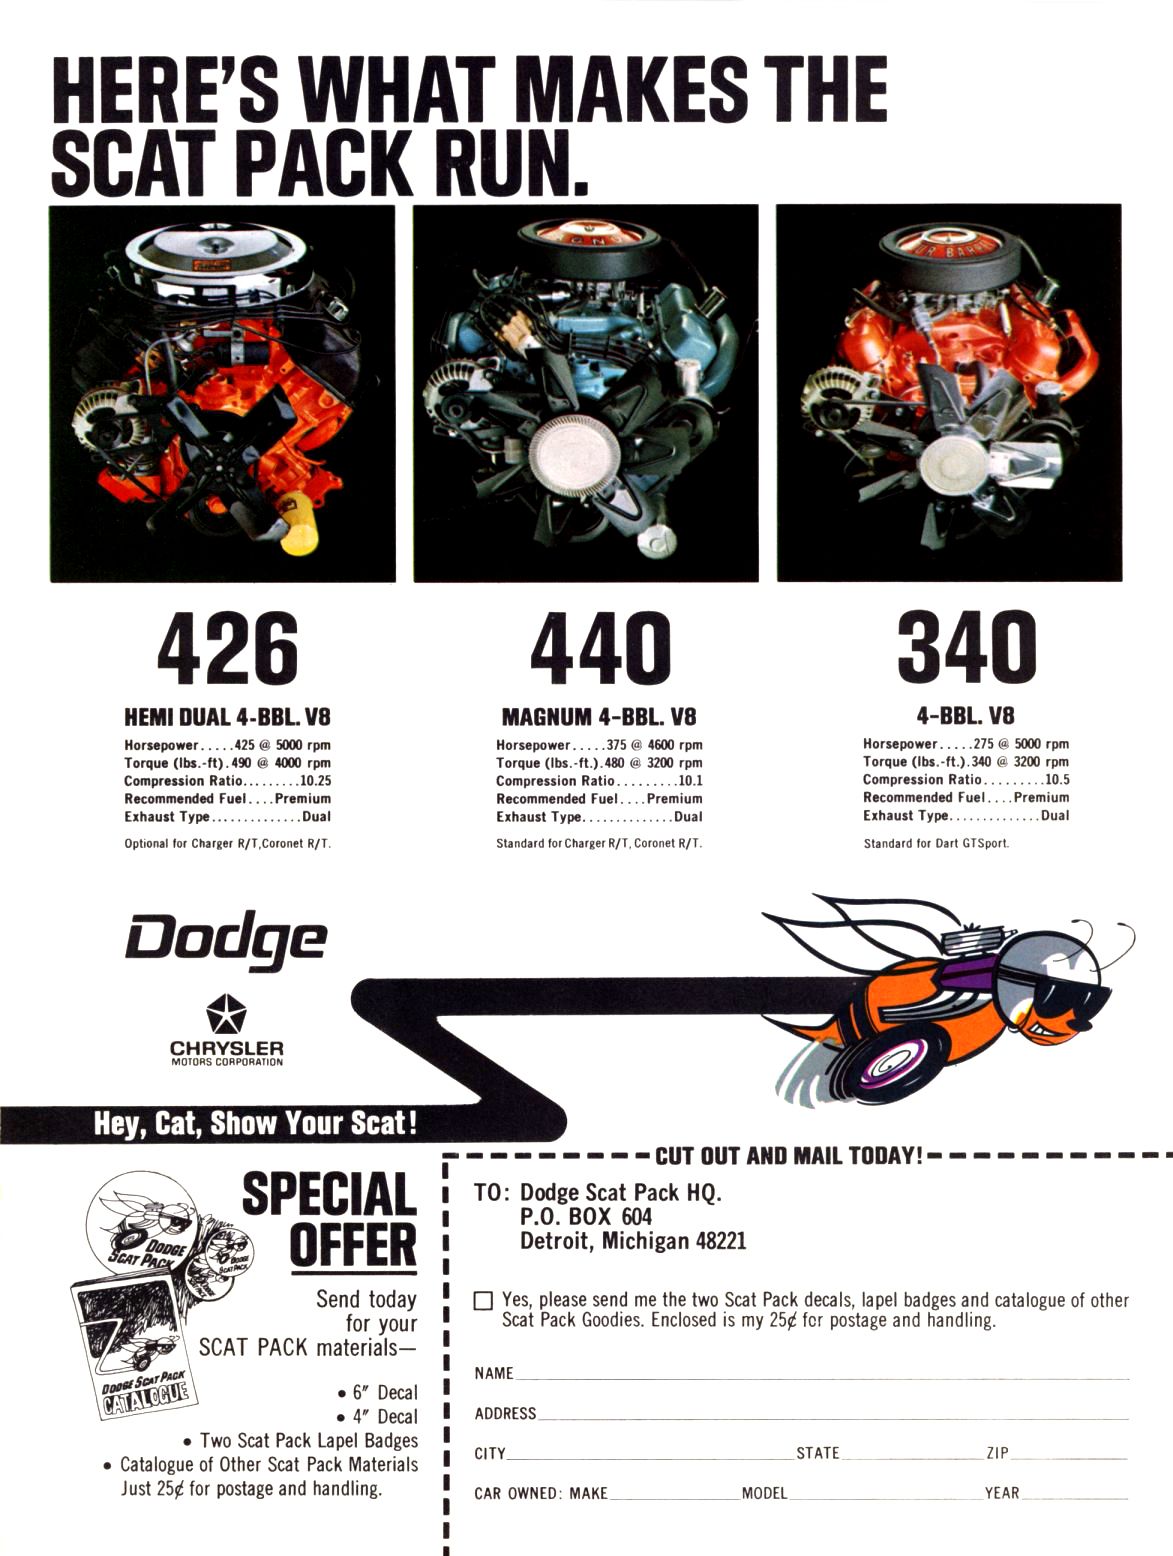 1968 Dodge Scat-Pack Brochure Page 1